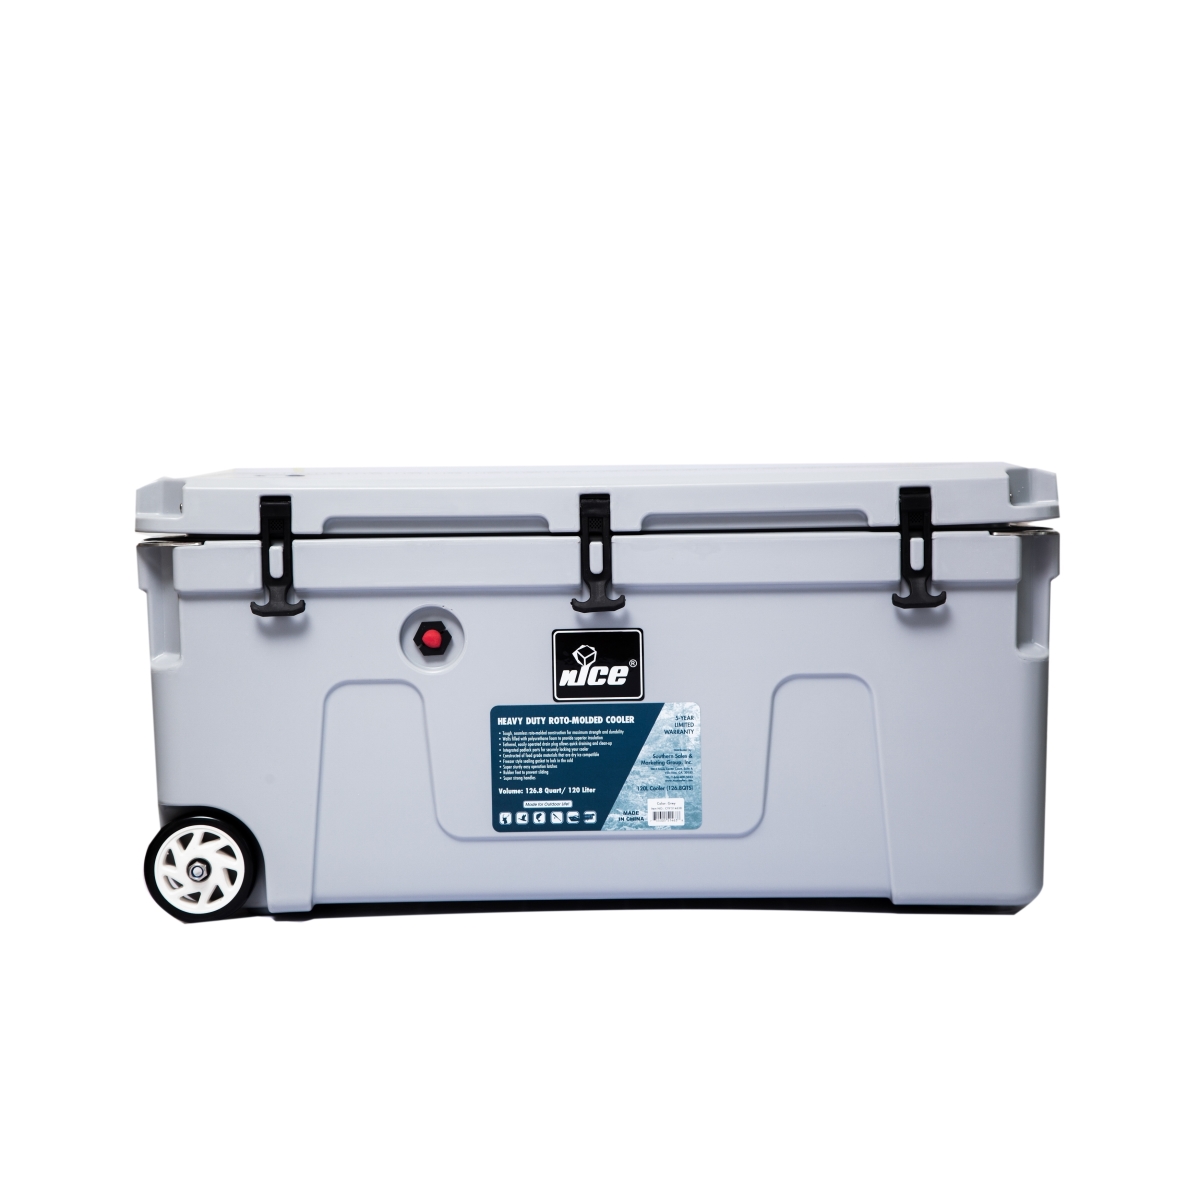 Cyy-514645 140l Premium Cooler With Wheels - Grey